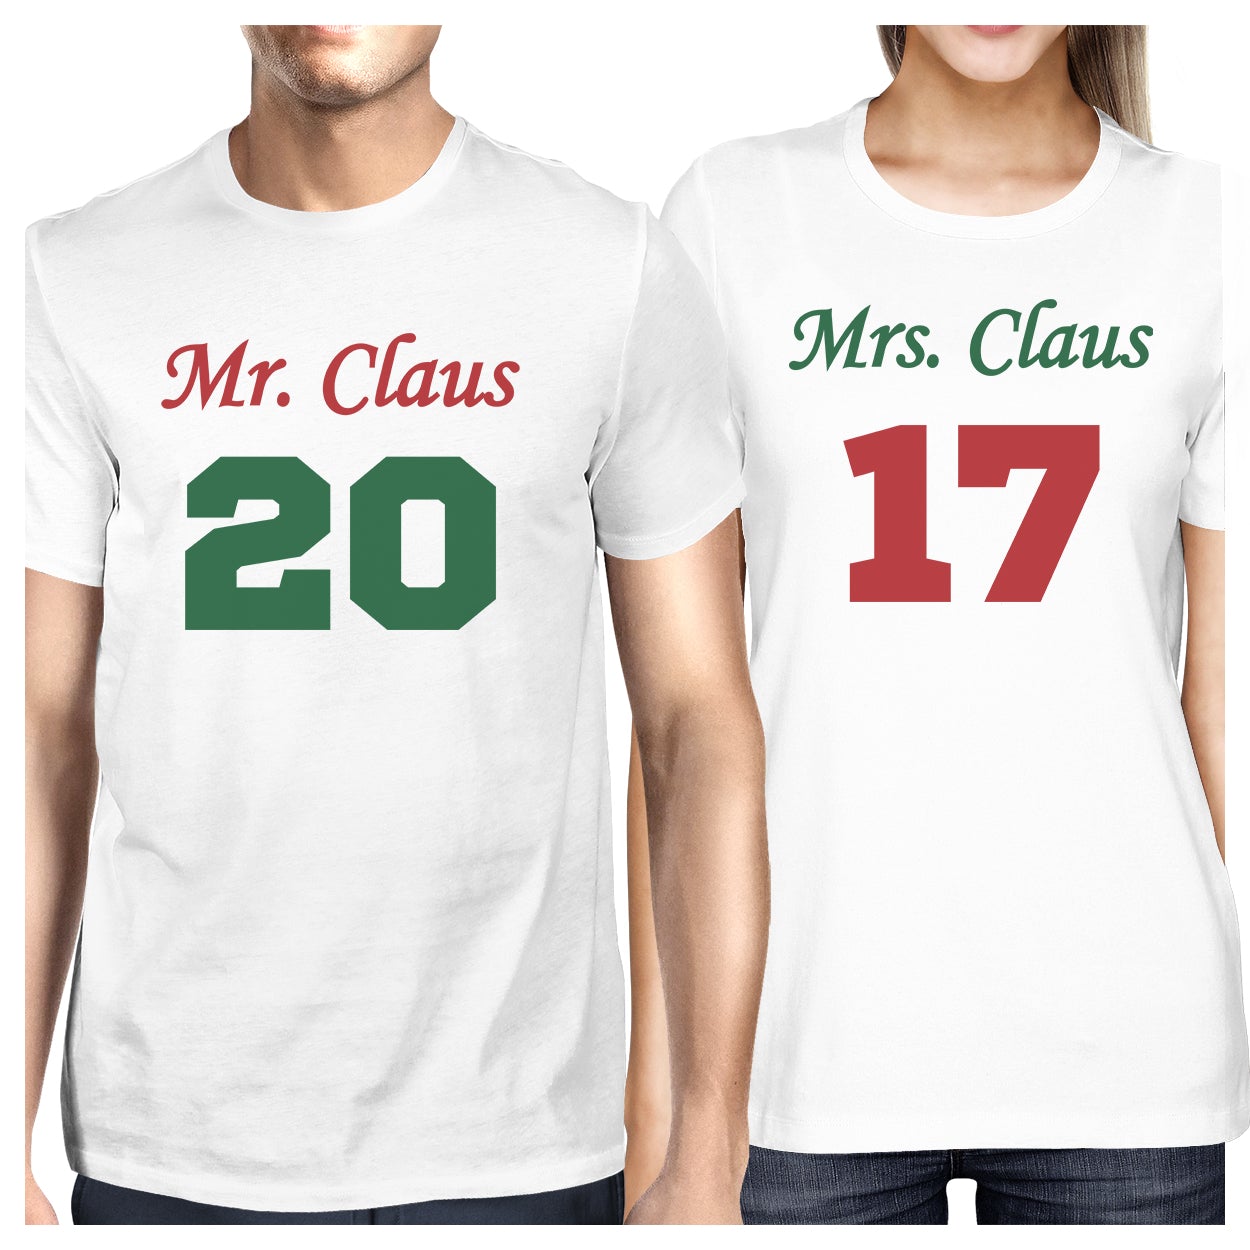 Mr. And Mrs. Claus Matching Couple White Shirts